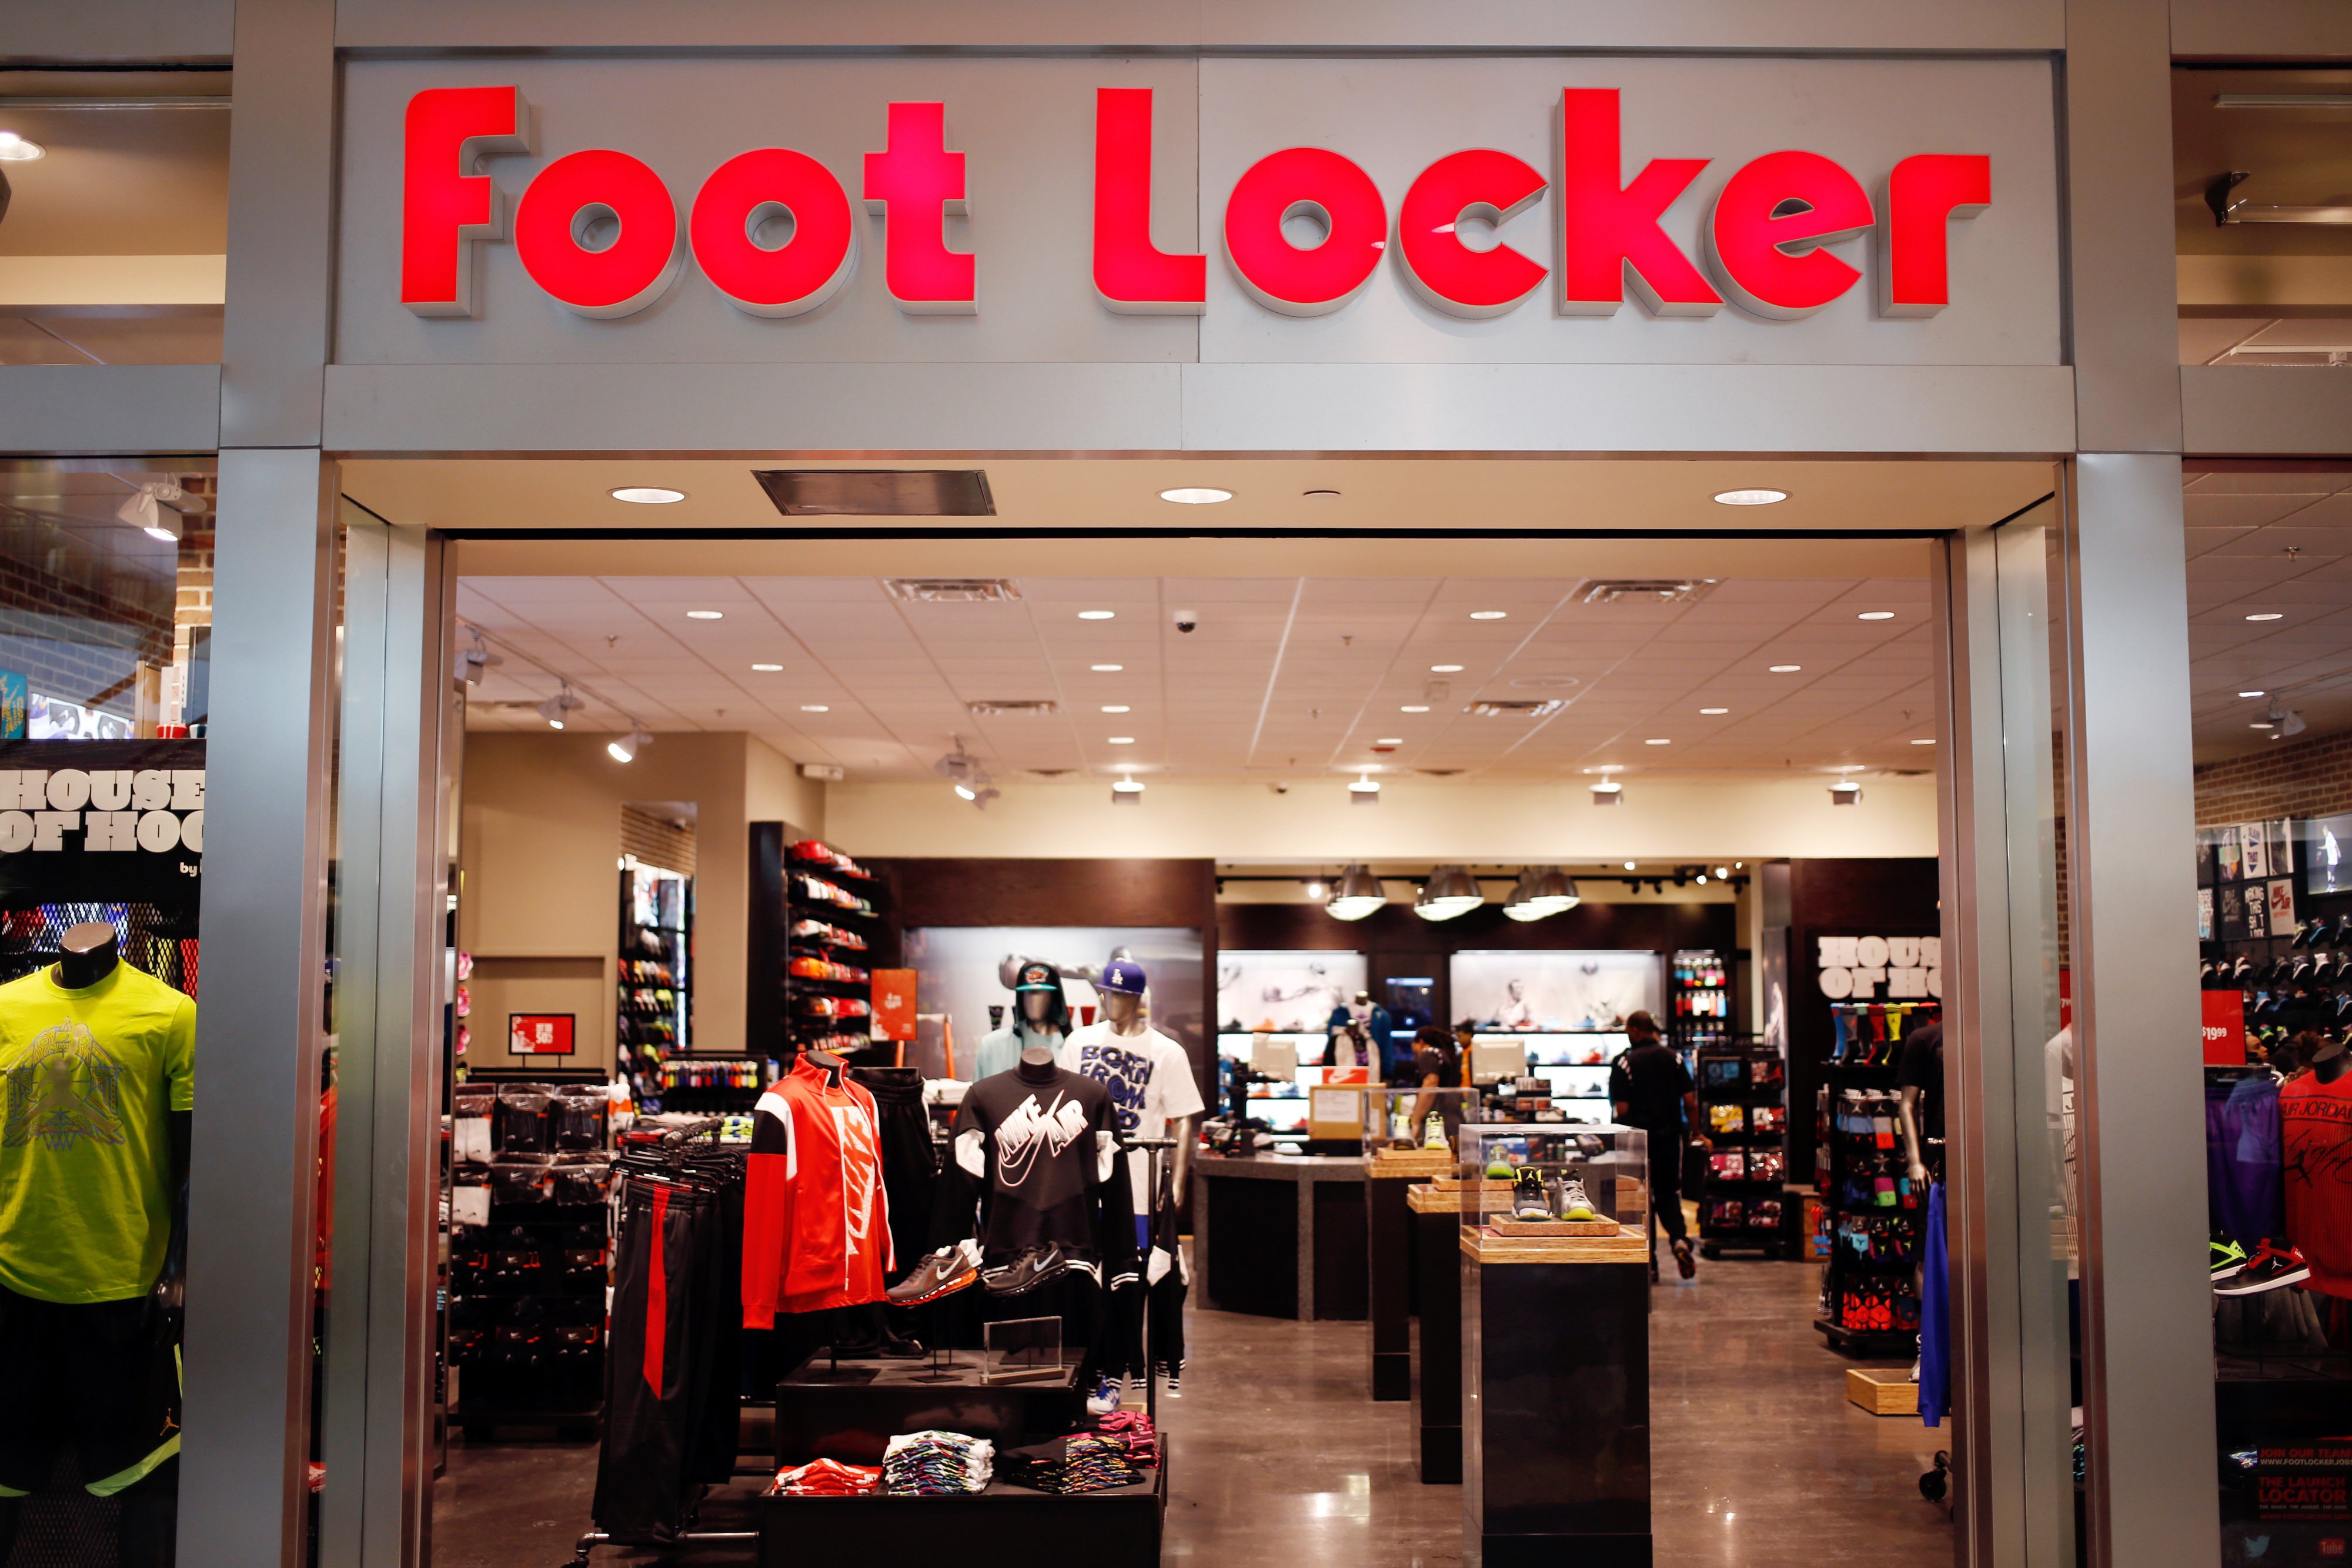 Foot Locker Plan B First Quarter Sales Drop Footwear sneakers shoes SoHo Foot Locker kicks sneakers stocks shares